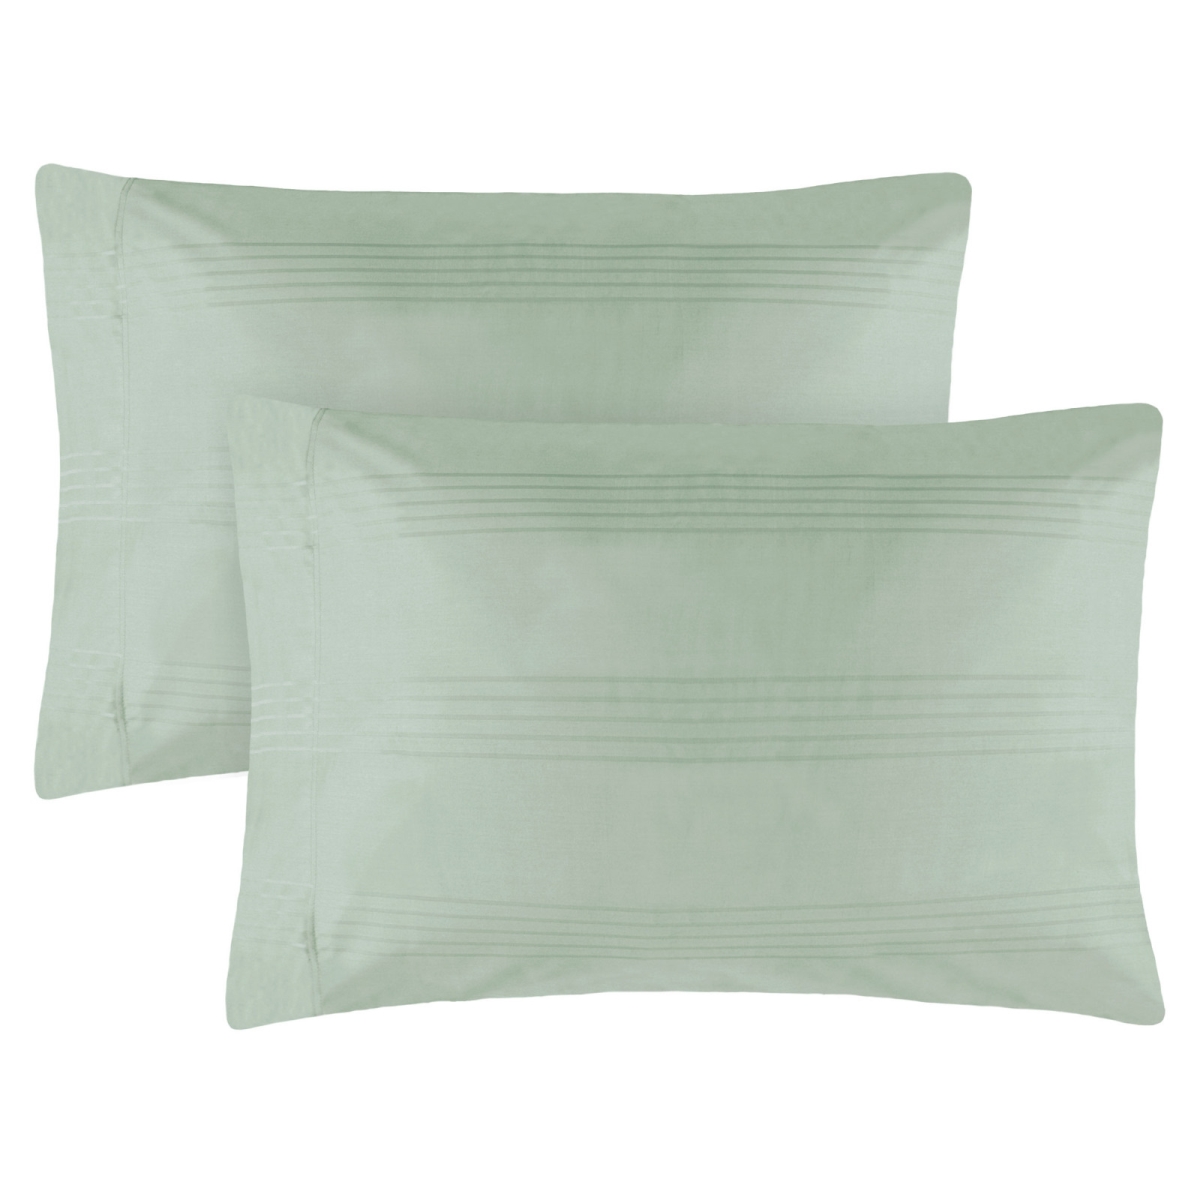 Yms008239 Premium 420 Thread Count 100 Percent Cotton Pillowcase Set, Aqua - King - 2 Piece